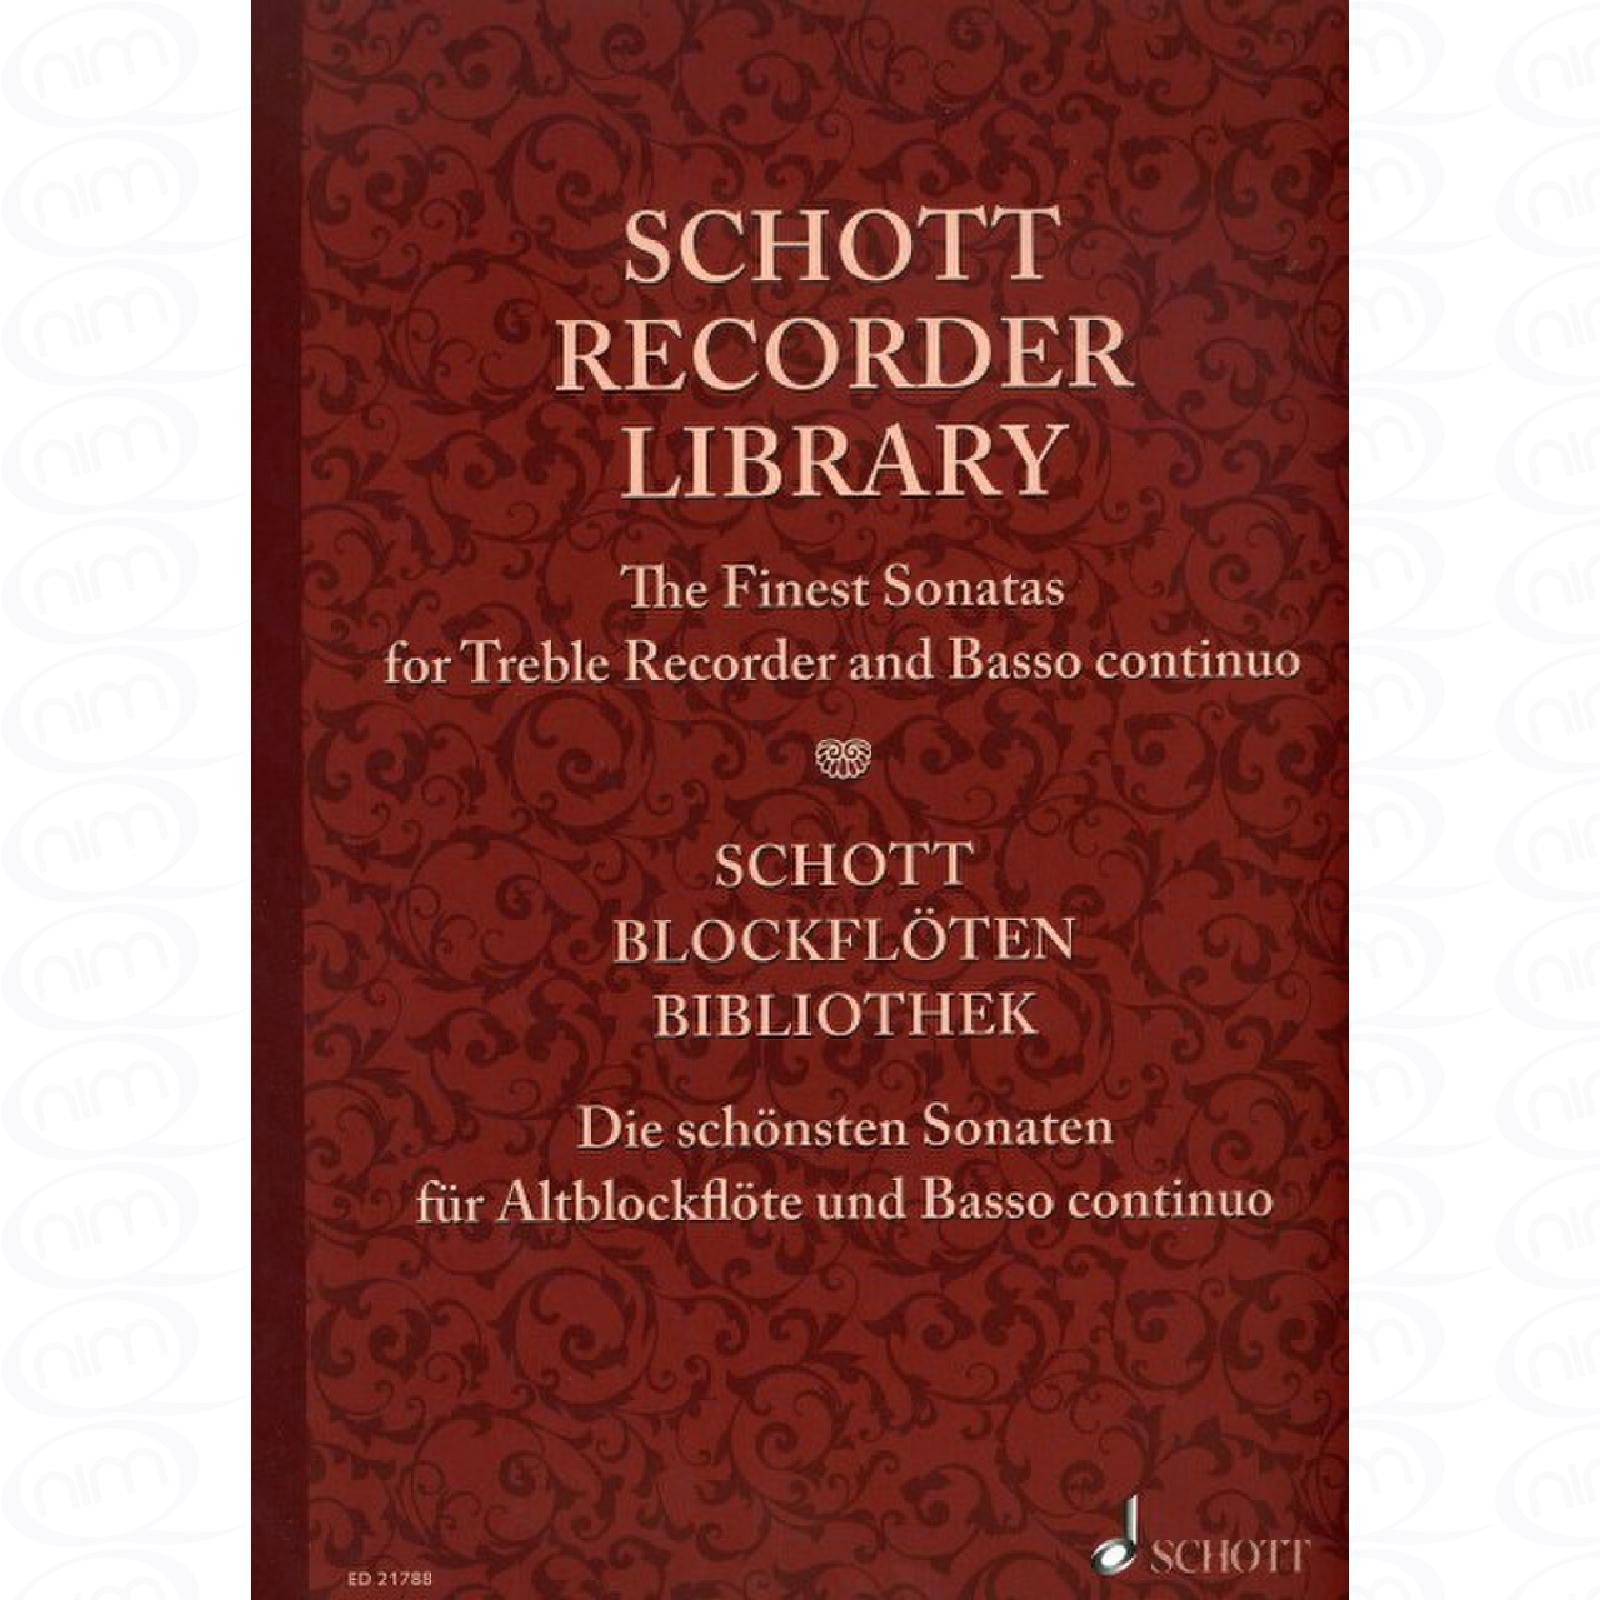 Schott Blockfloeten Bibliothek - arrangiert für Altblockflöte - Basso Continuo [Noten/Sheetmusic]